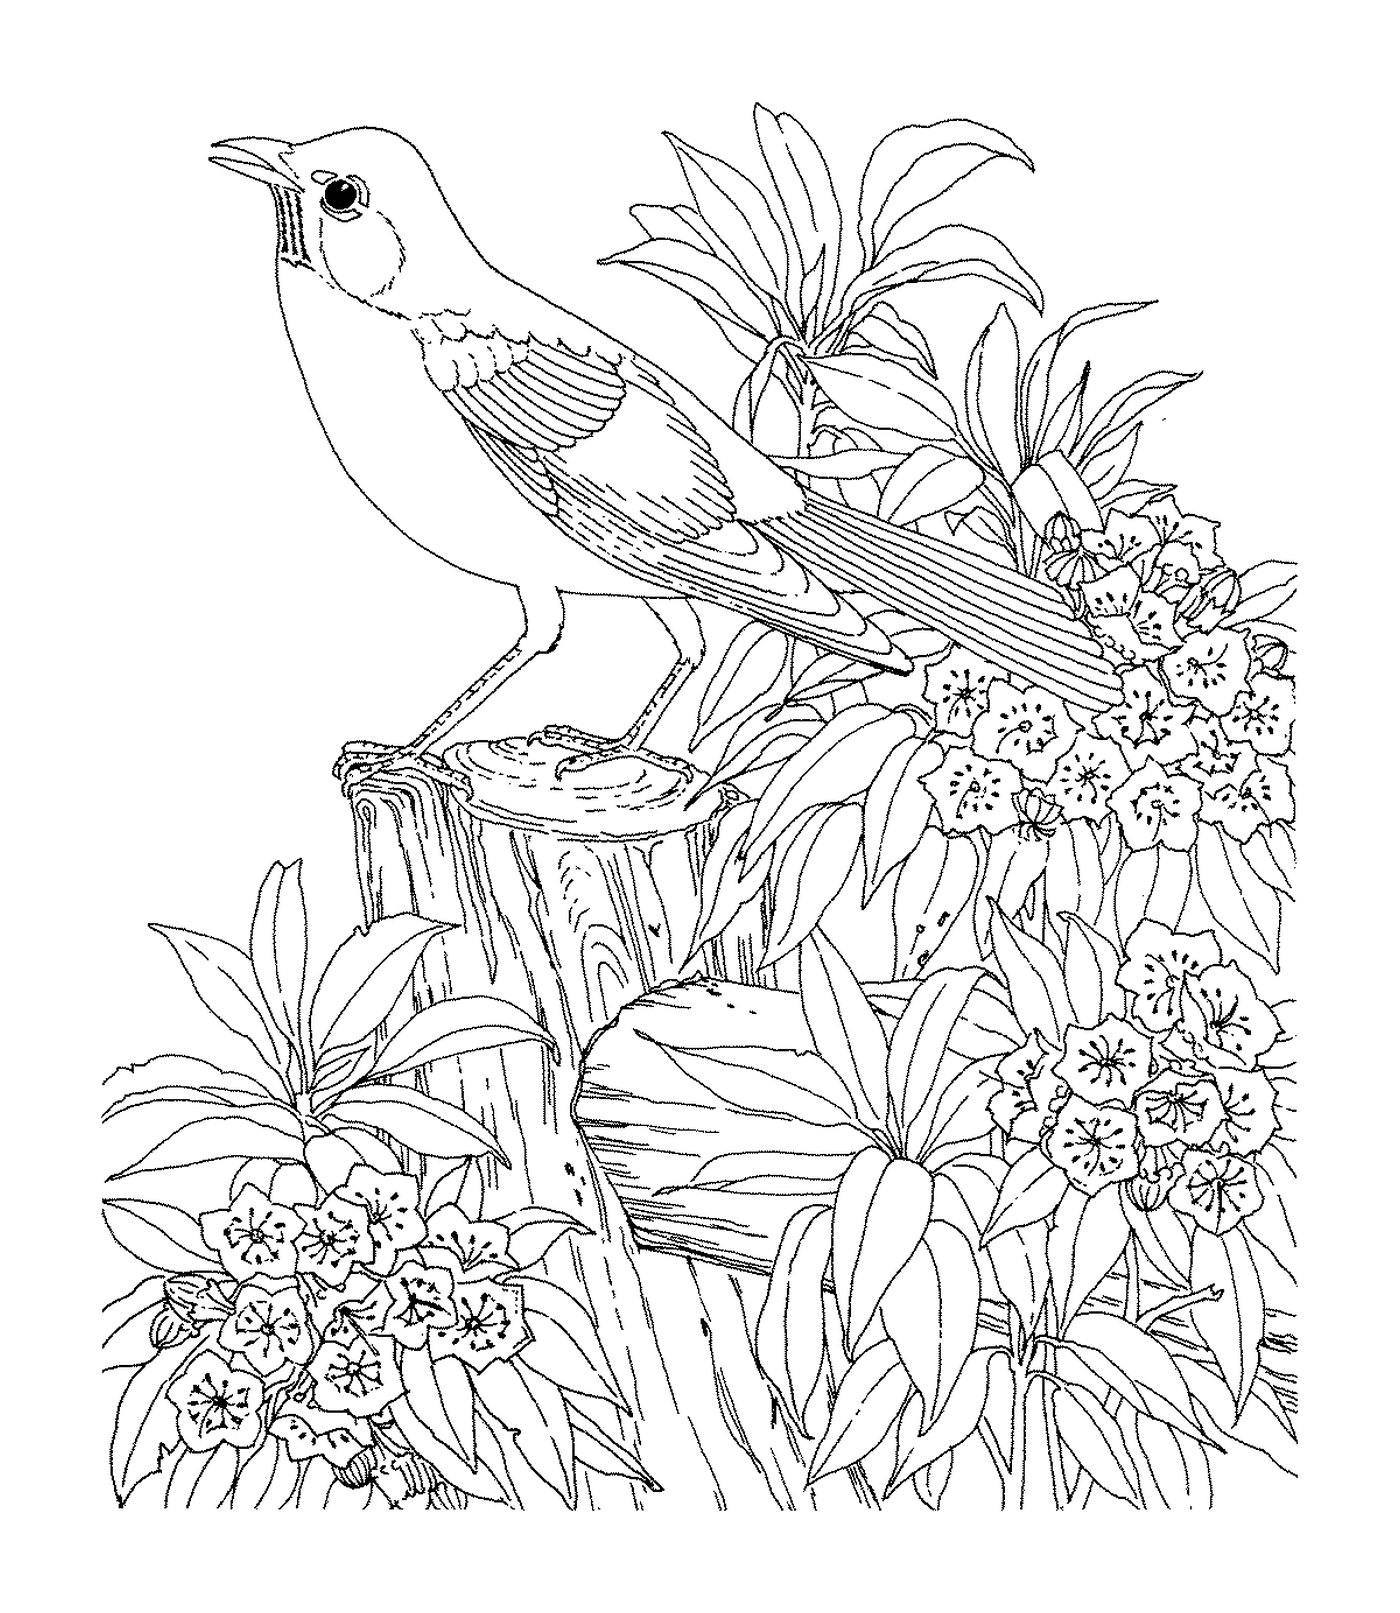  Un uccello seduto su un ramo 